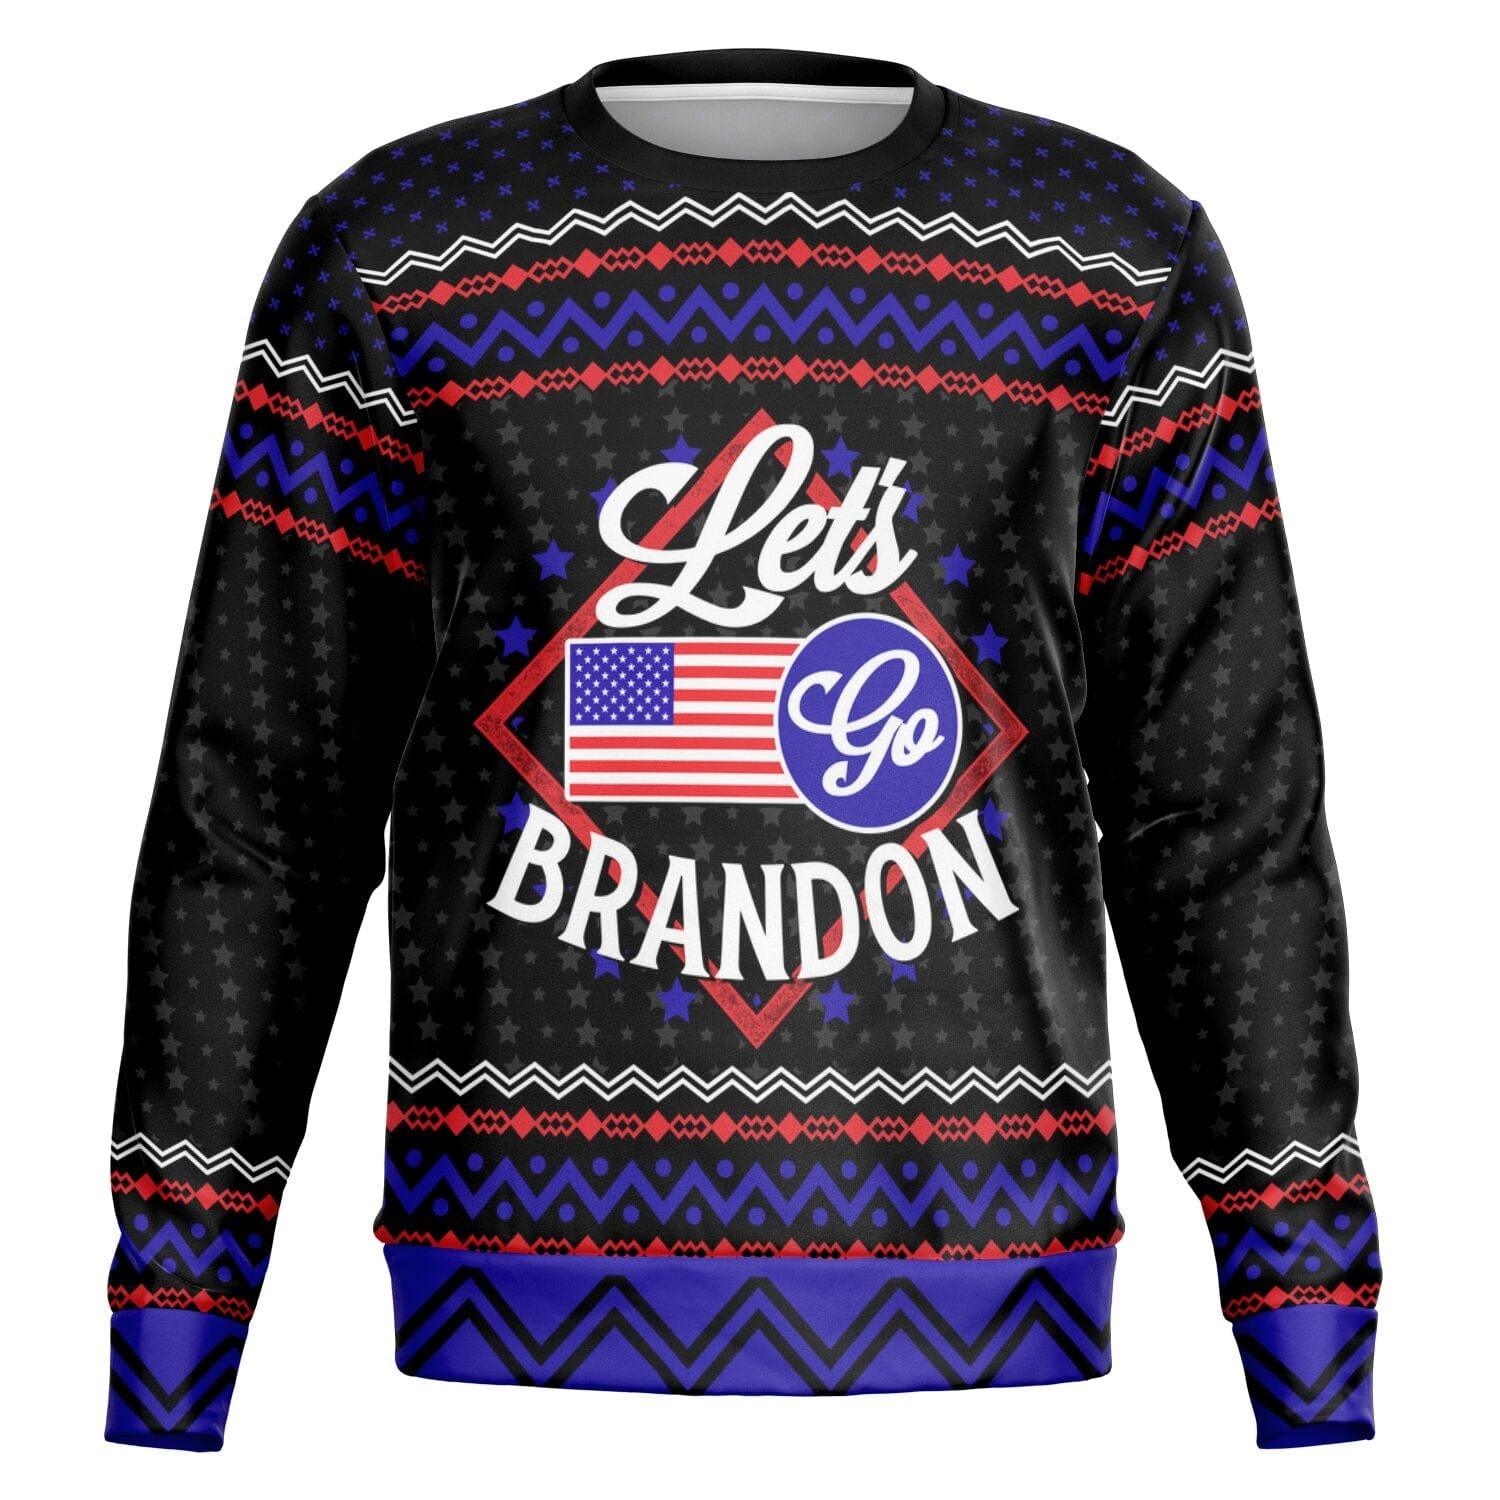 Lets Go Brandon sweatshirt 